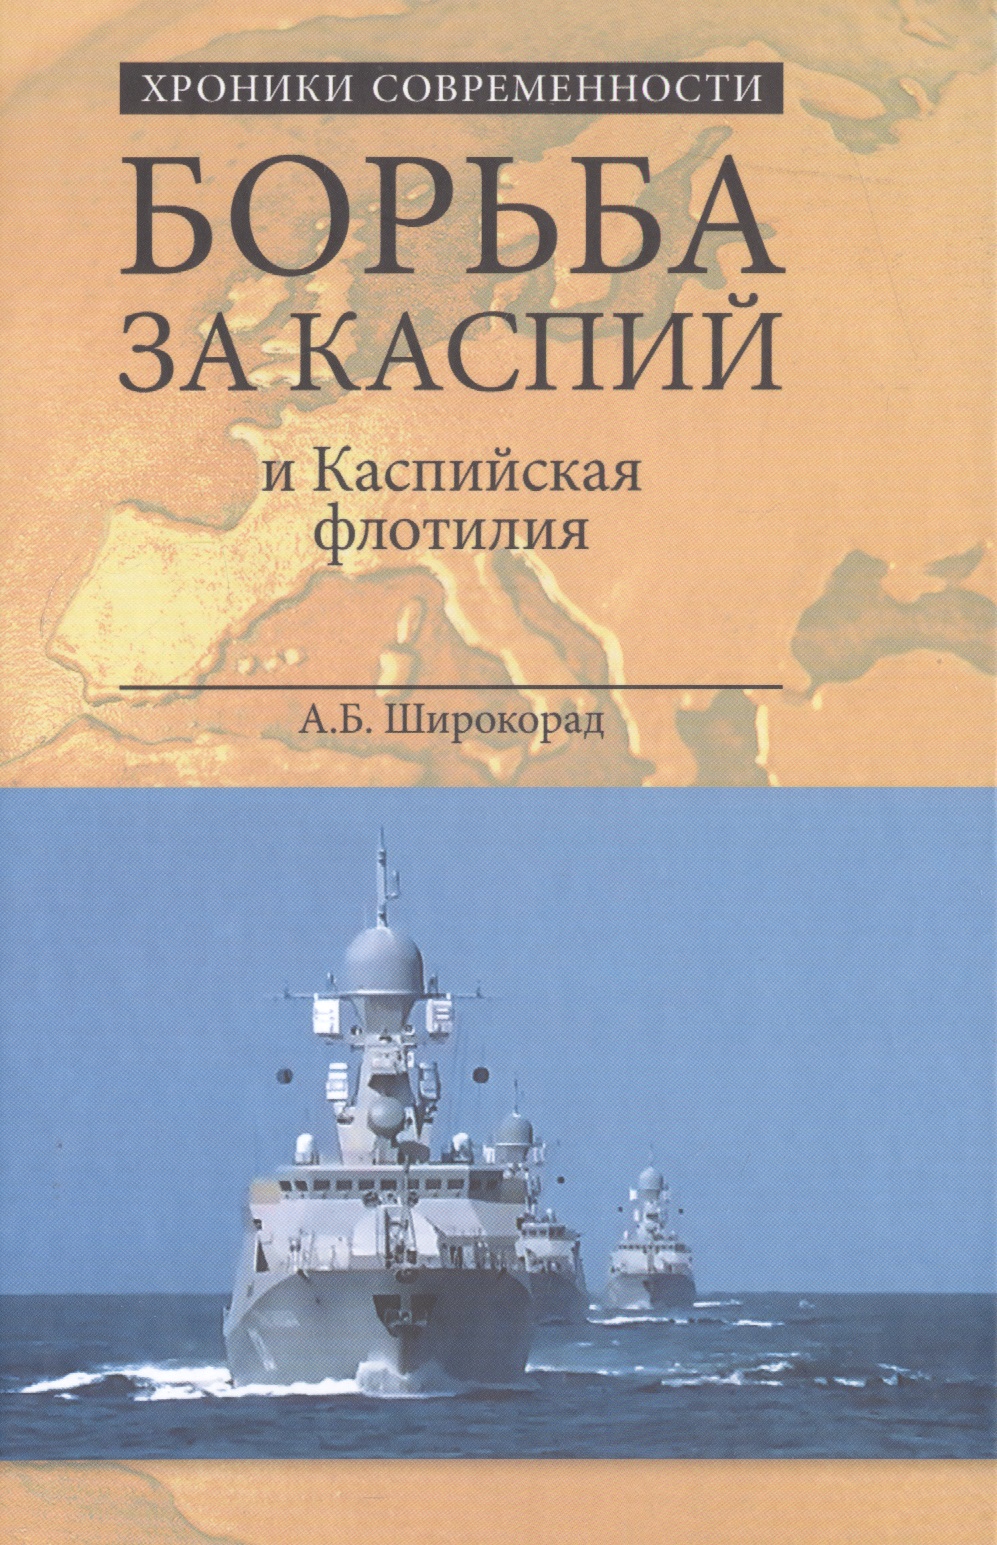 Широкорад книги. Книги о Каспийской флотилии. Книга Каспийское море.